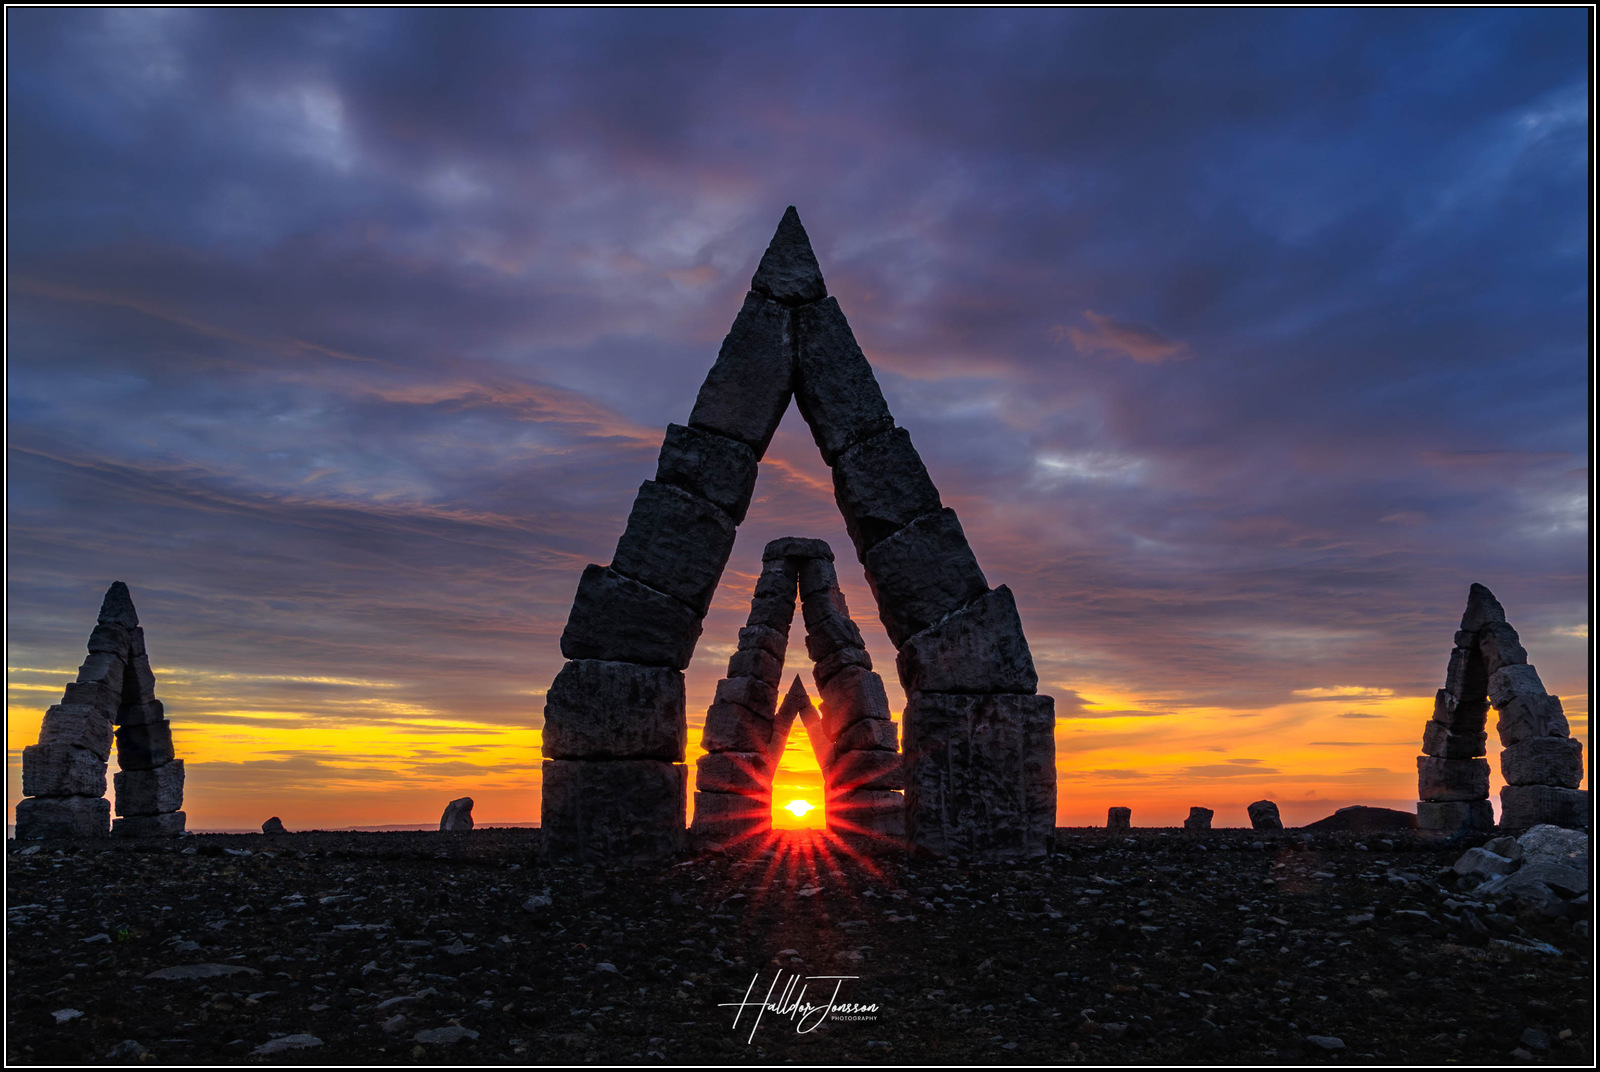 The Arctic Stonehenge, Halldor Jonsson